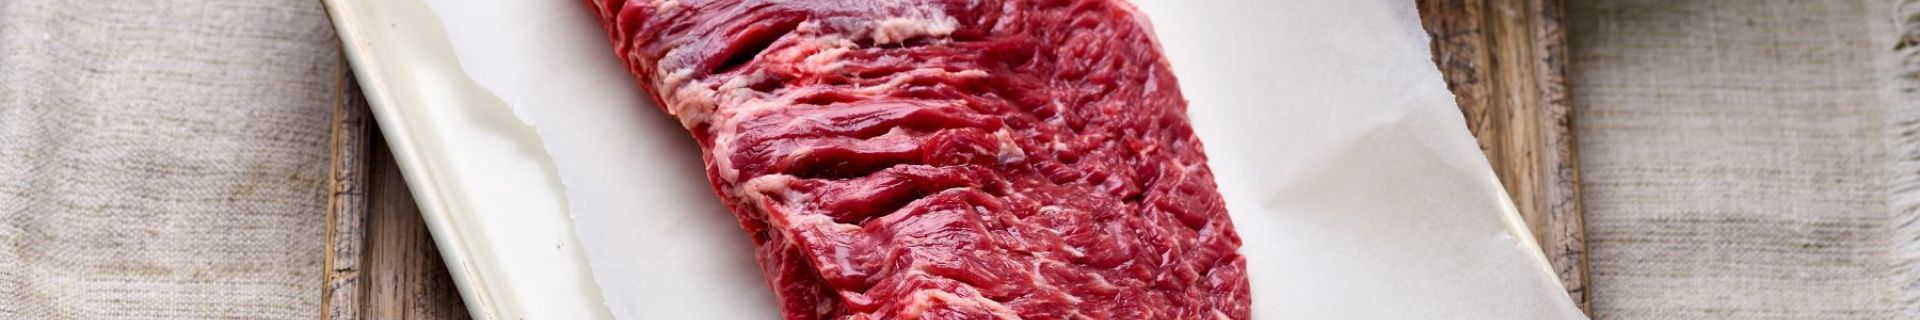 On The Butcher's Block: Beef Skirt Steak